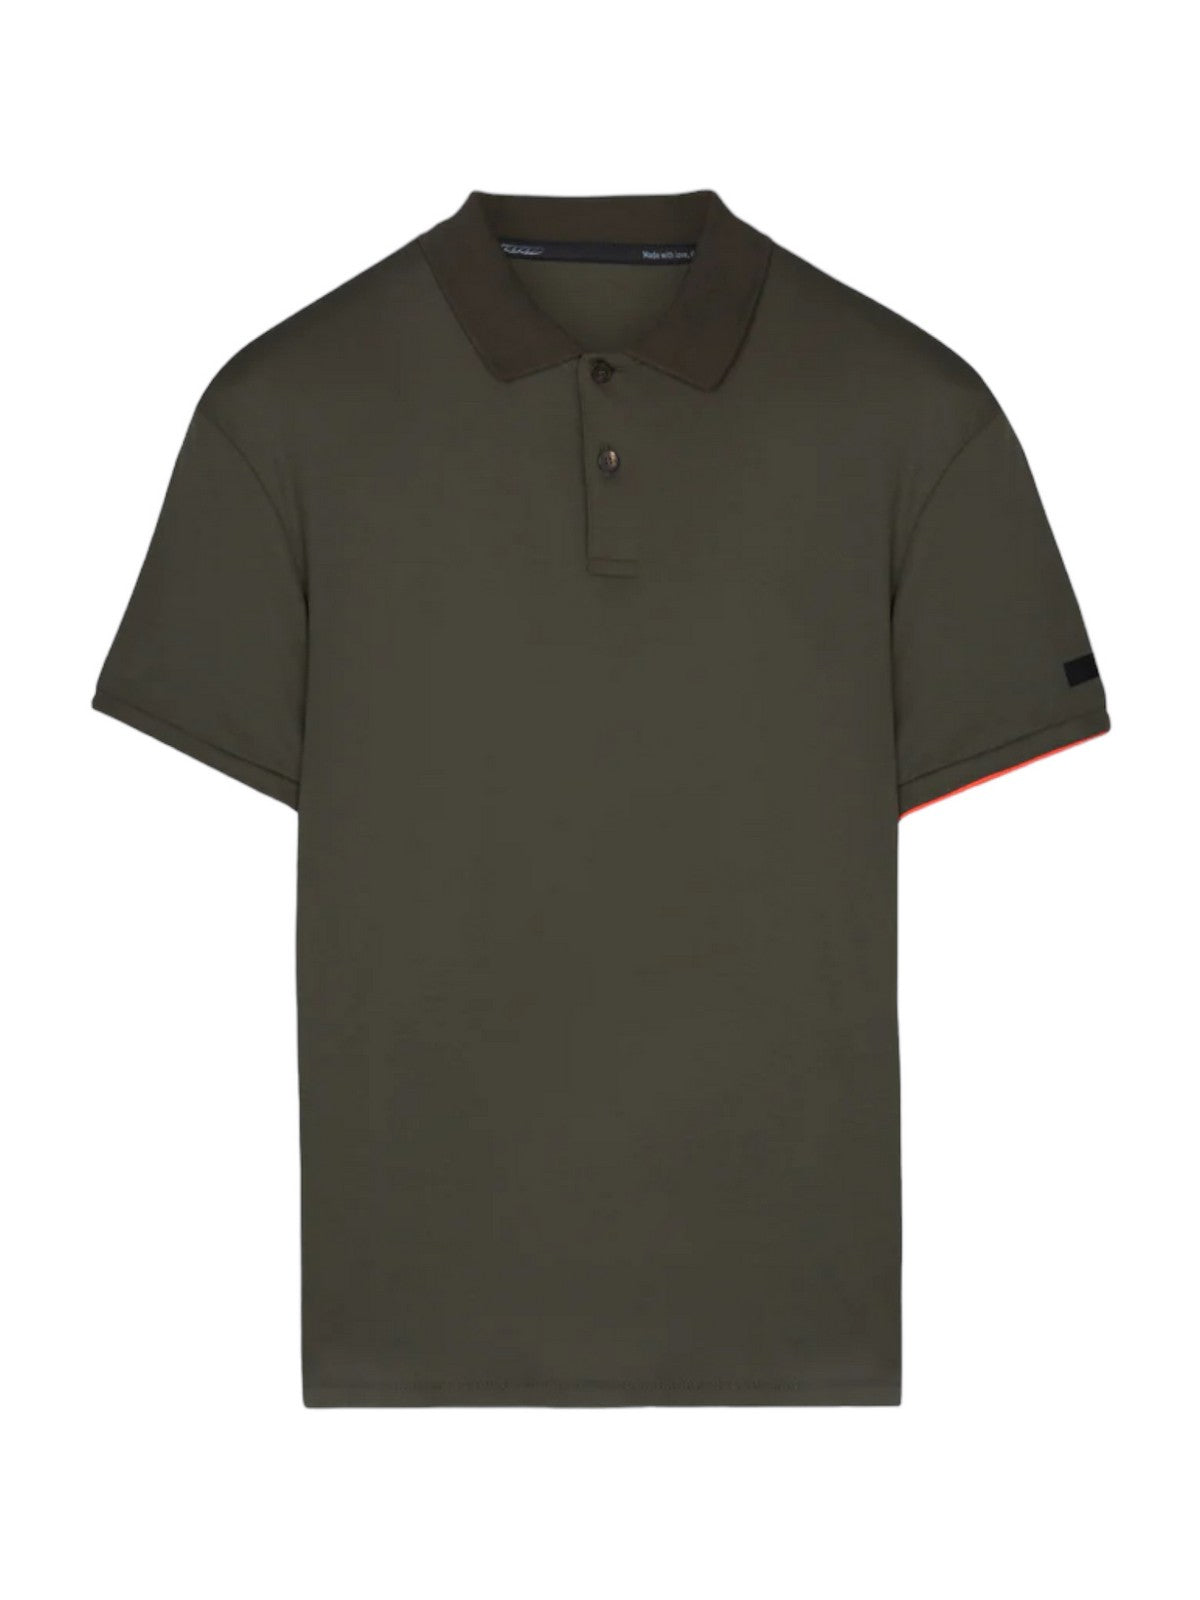 RRD T-Shirt e Polo Uomo  23139 21 Verde